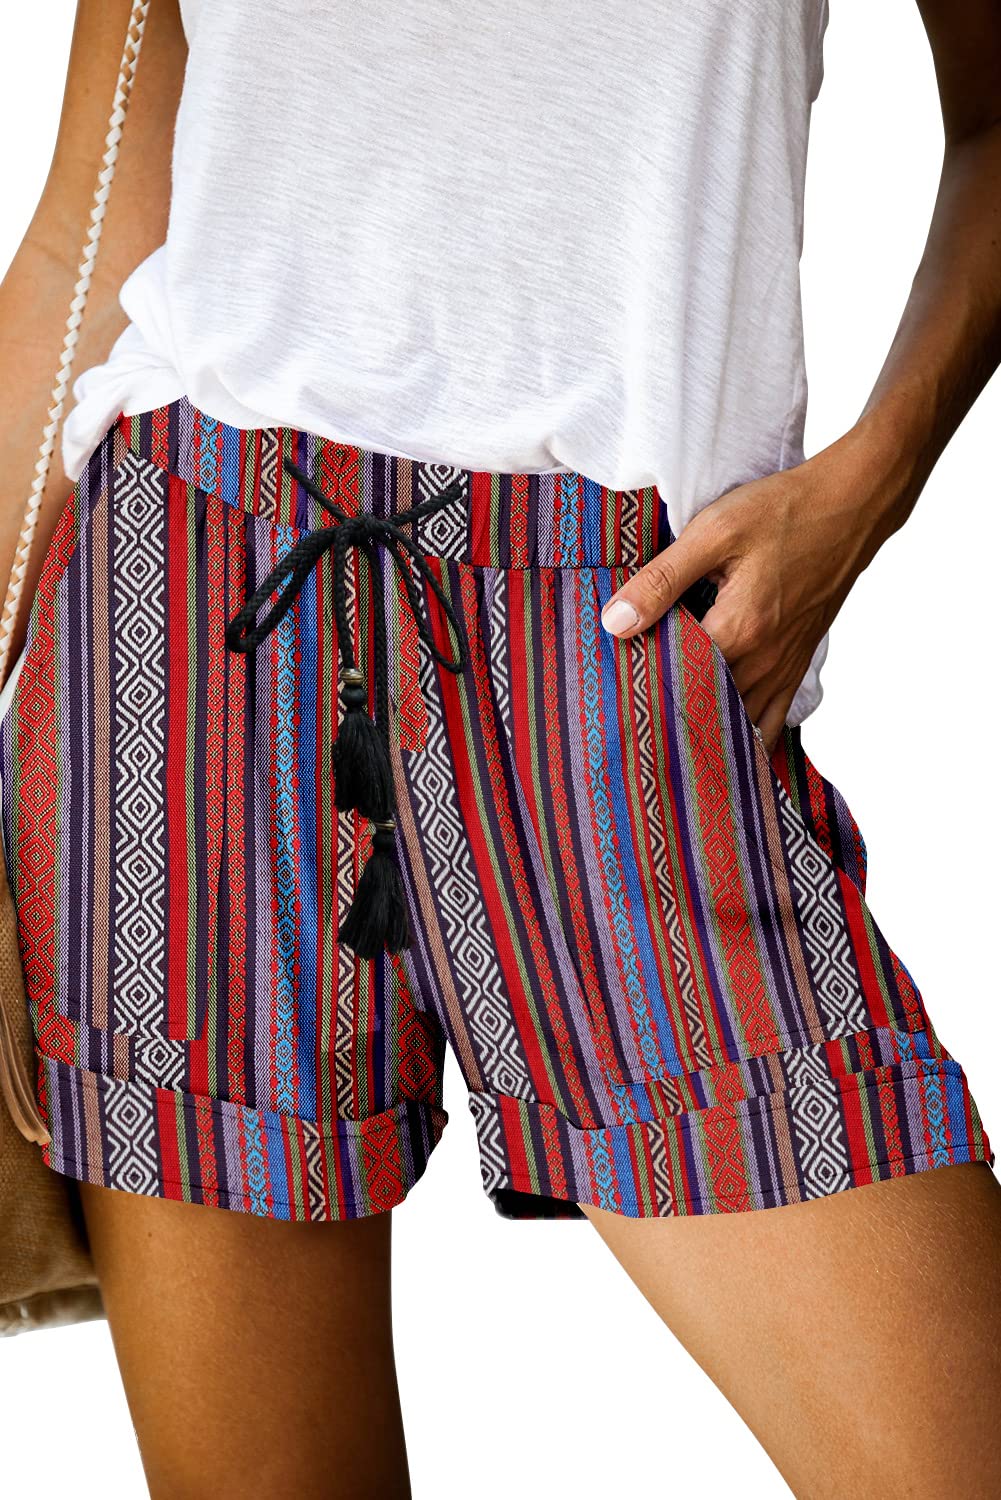 QUEEN PLUS Womens Casual Shorts Comfy Elastic Waist Drawstring Pocket Shorts Pants